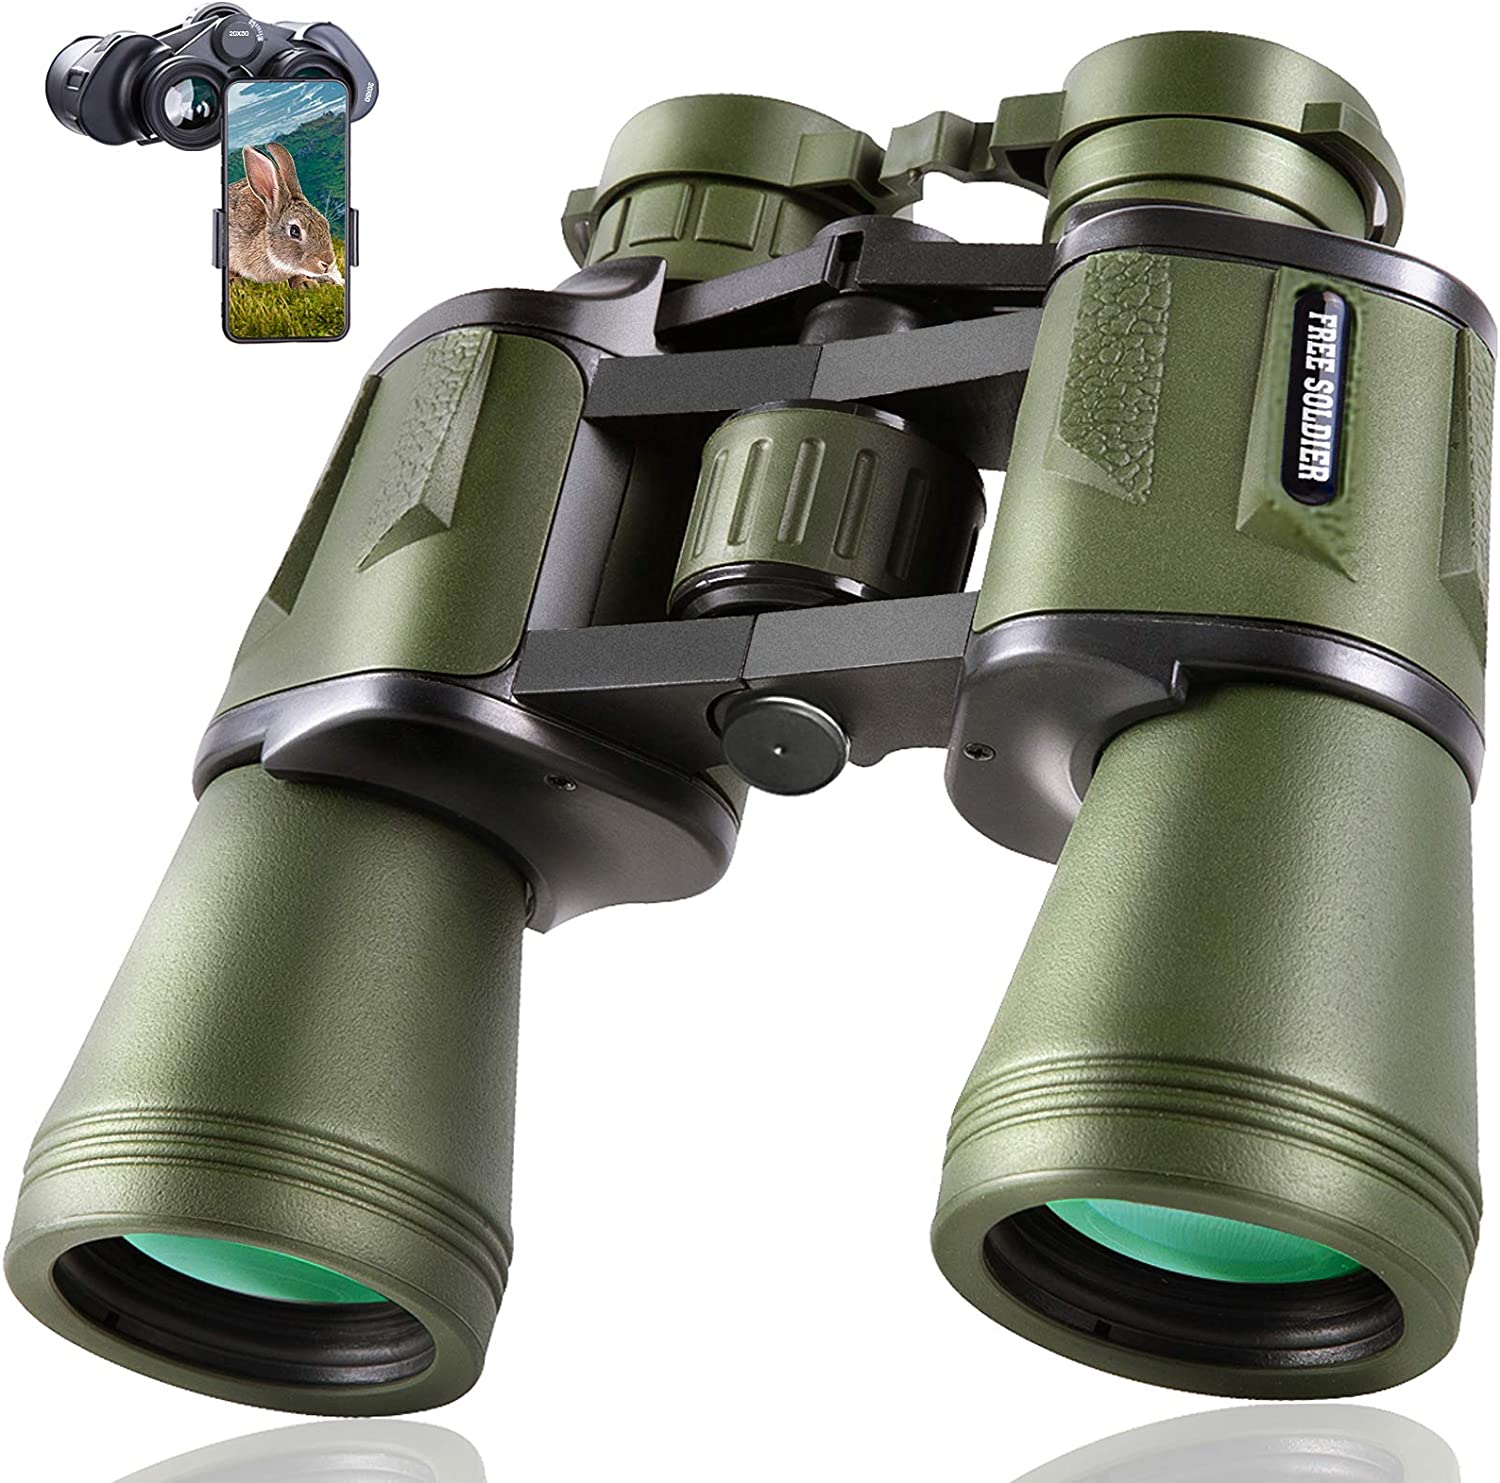 High-Power 20x50 Binoculars - Adult & Kids